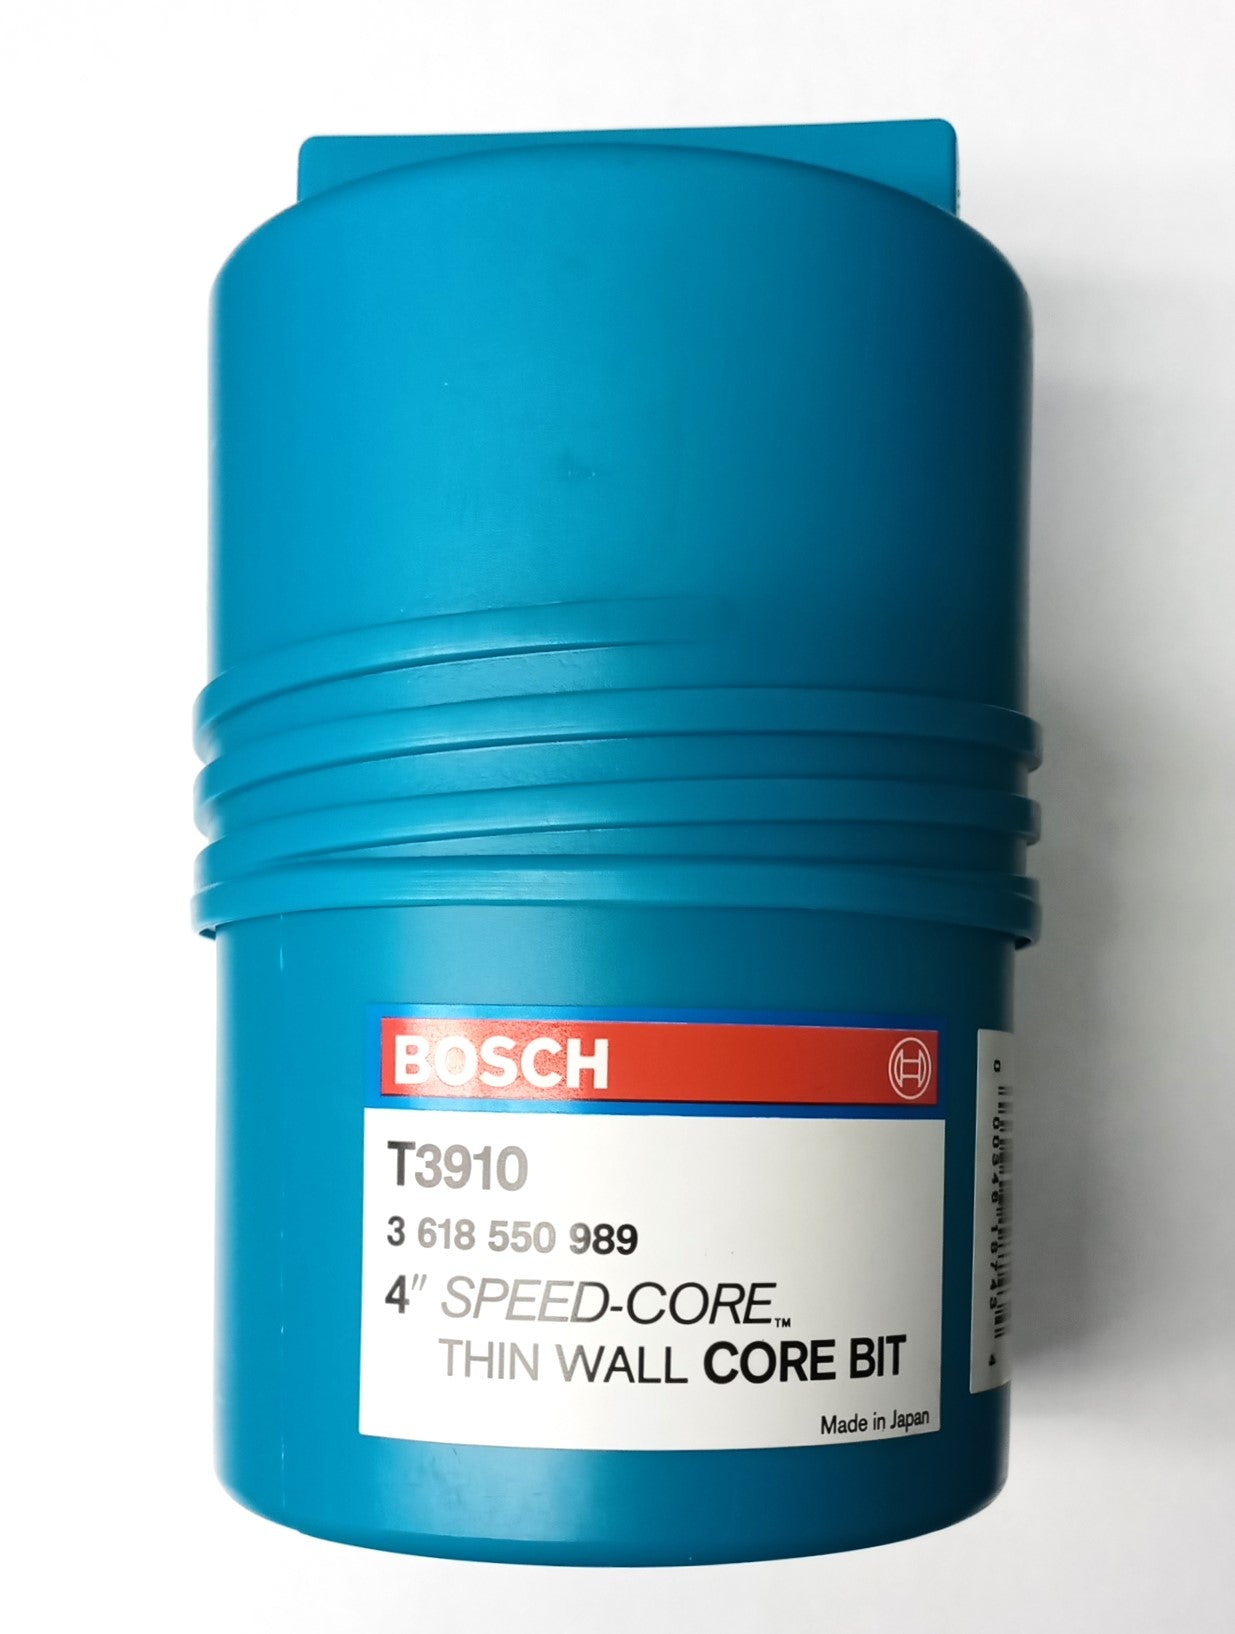 Bosch T3910 4" SDS Plus Speed-core Thin Wall Core Bit Japan